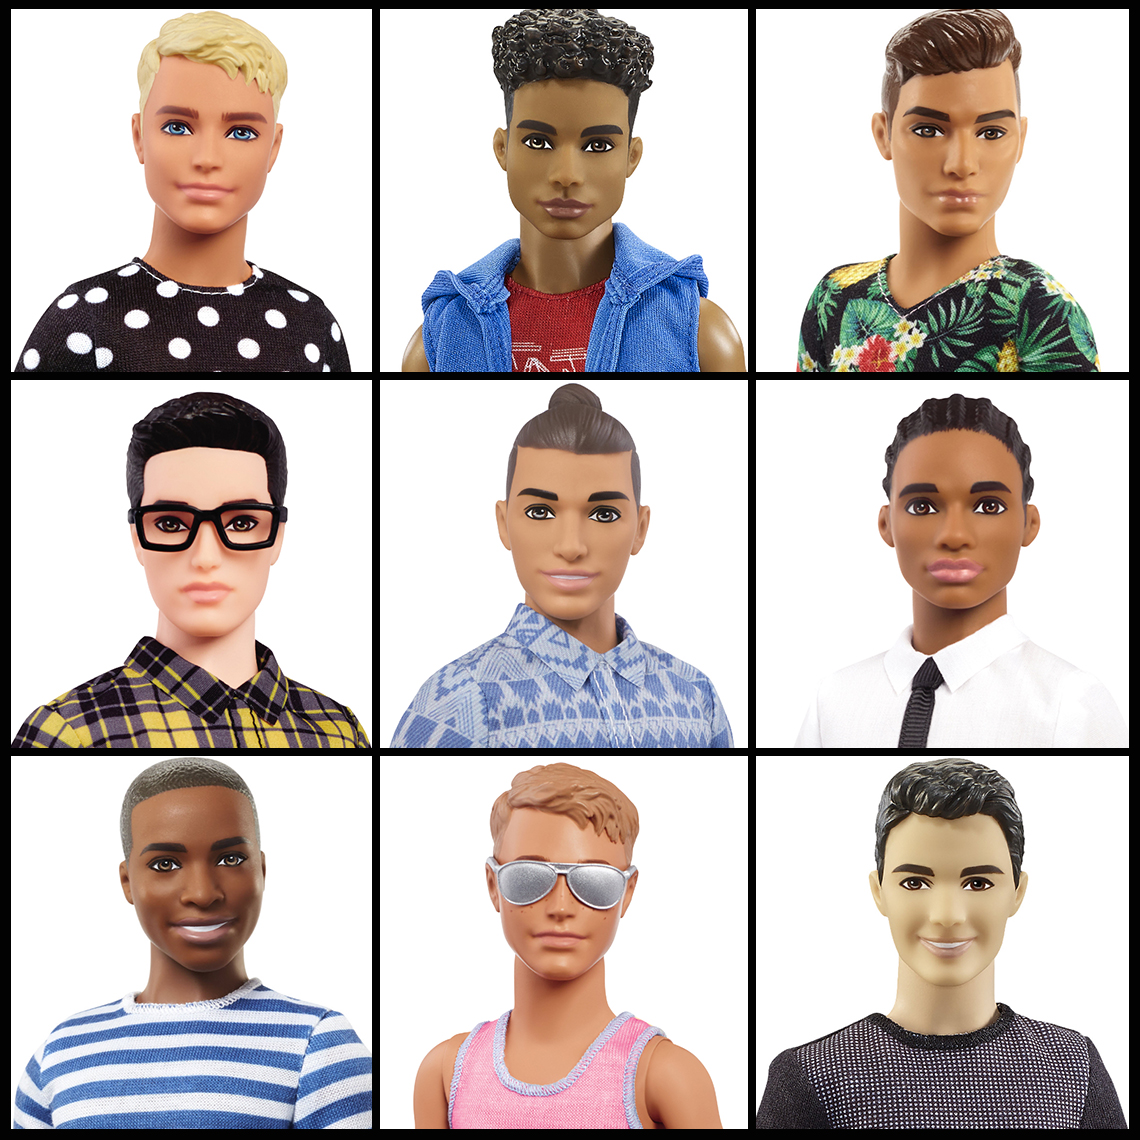 Faces of the Mattel 2017 Ken Fashionistas Dolls